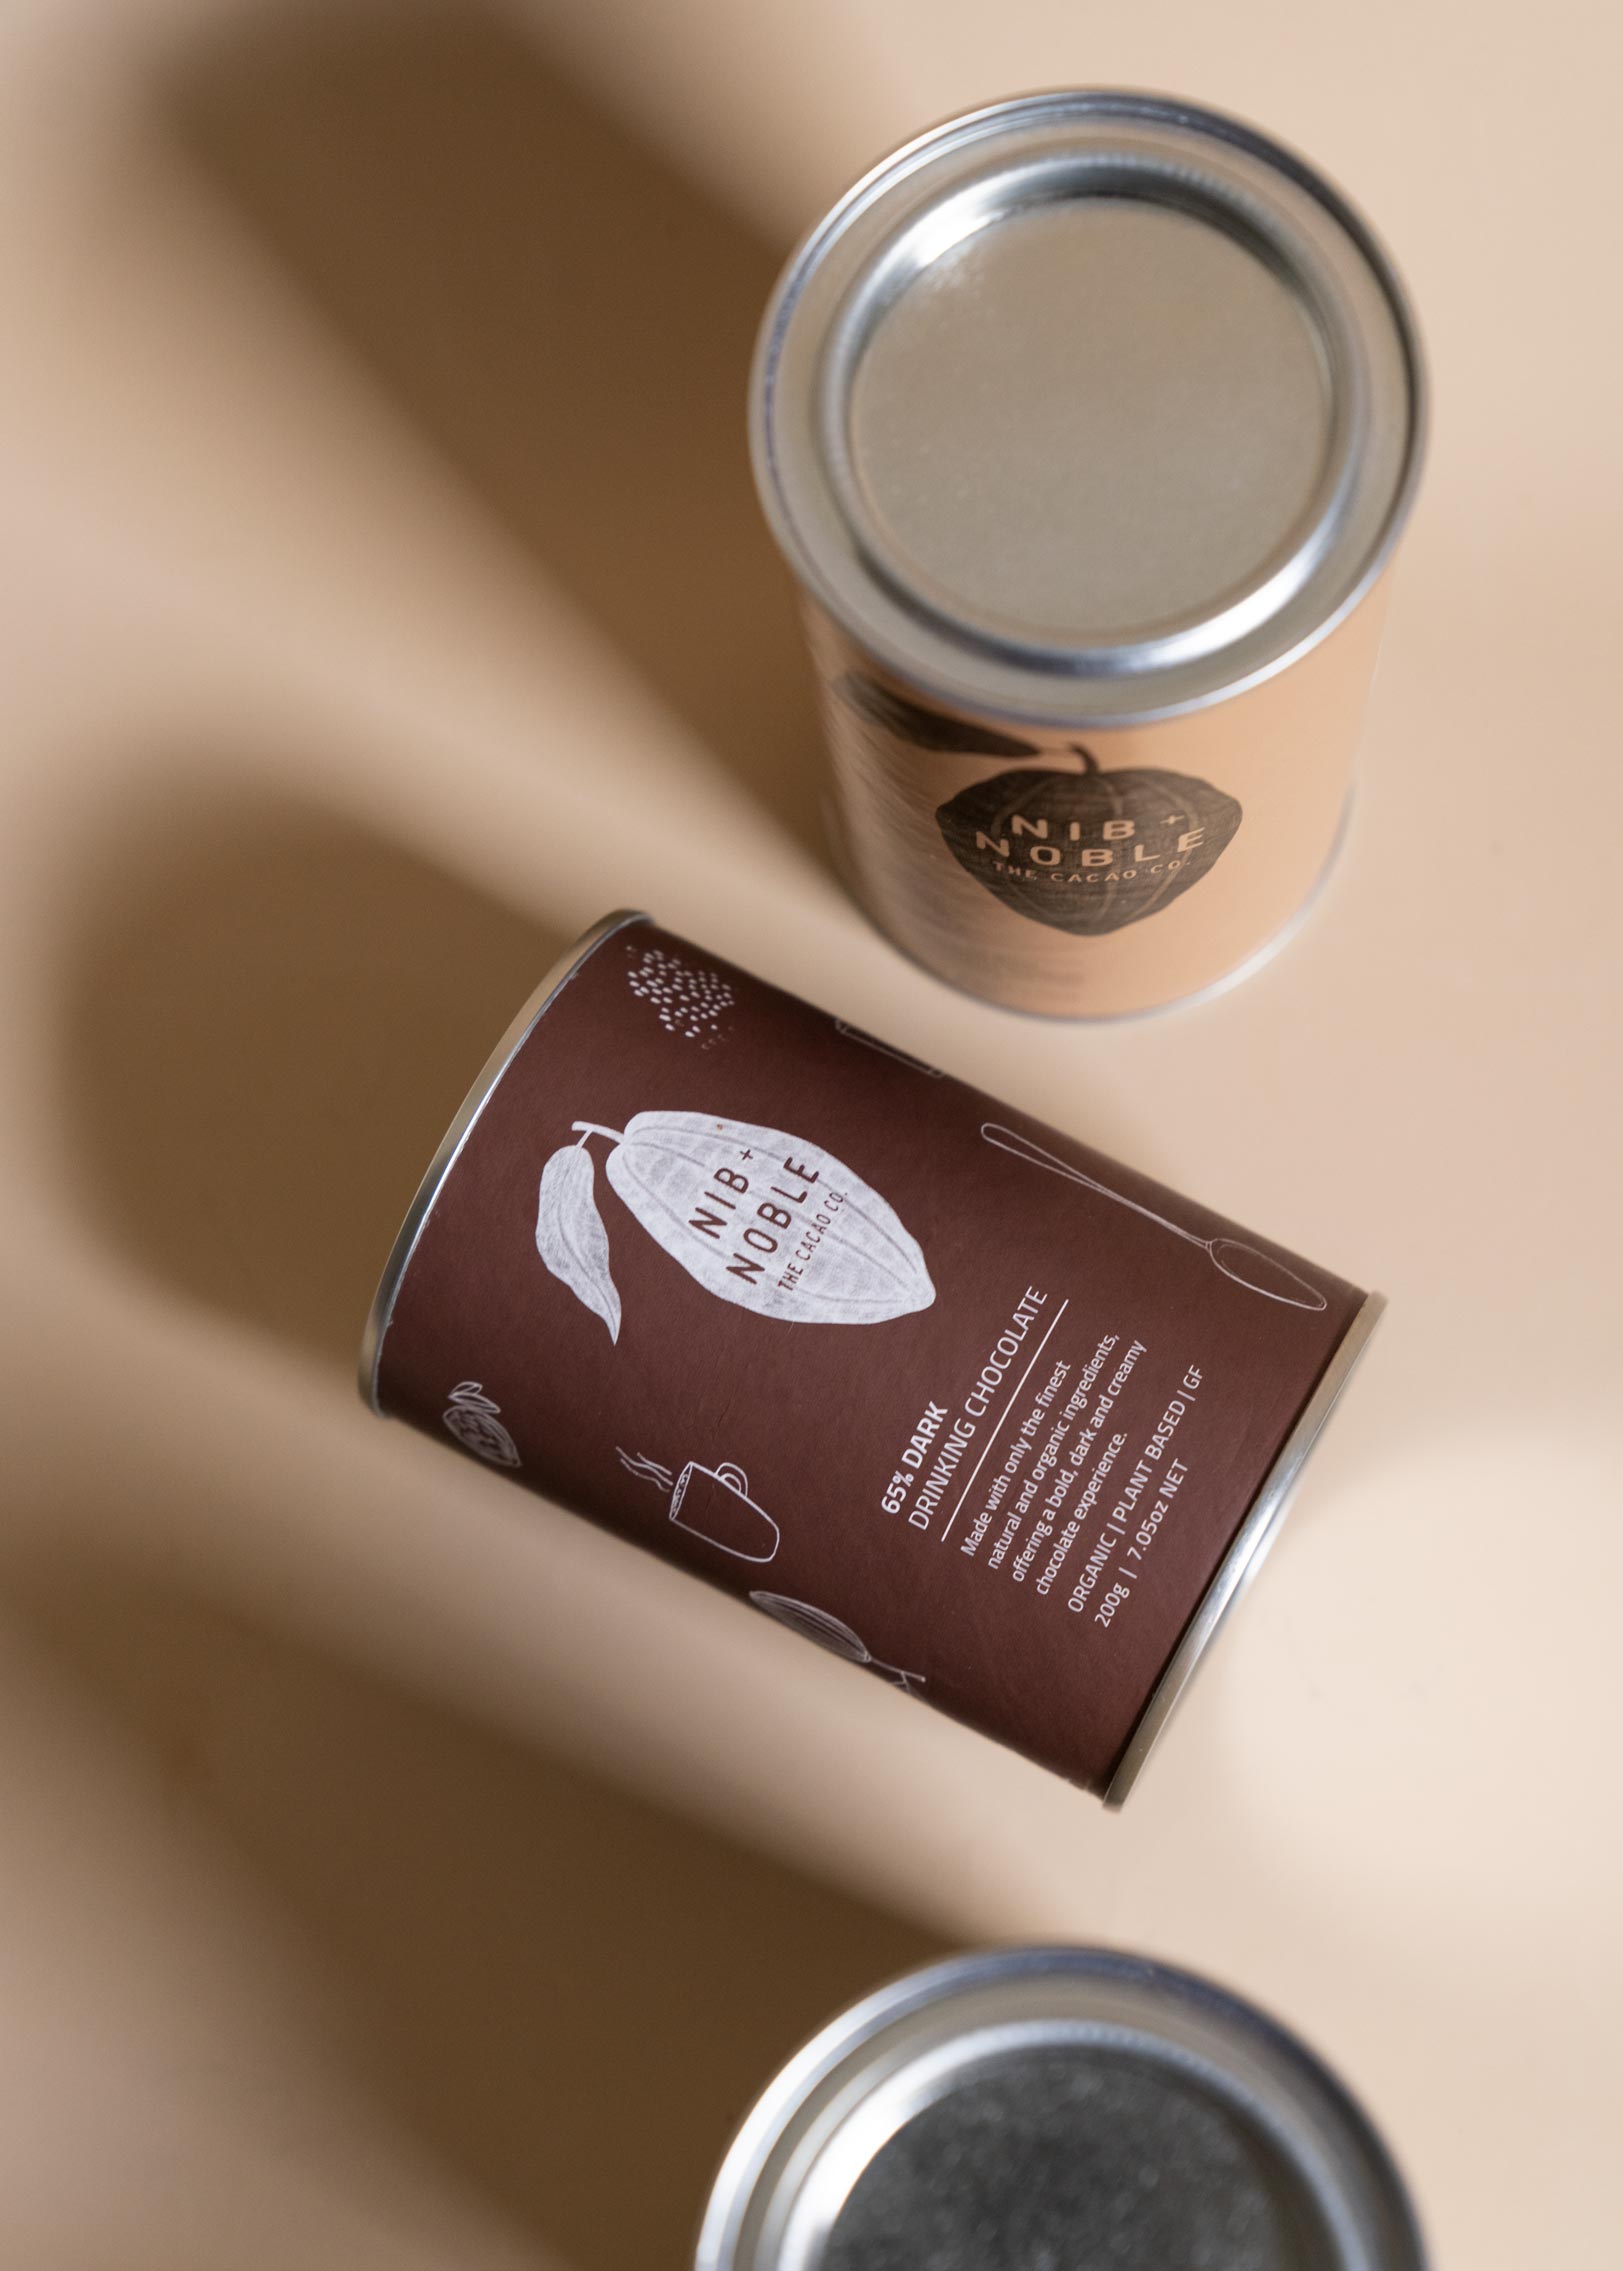 65% Dark Organic Drinking Chocolate - Nib and Noble